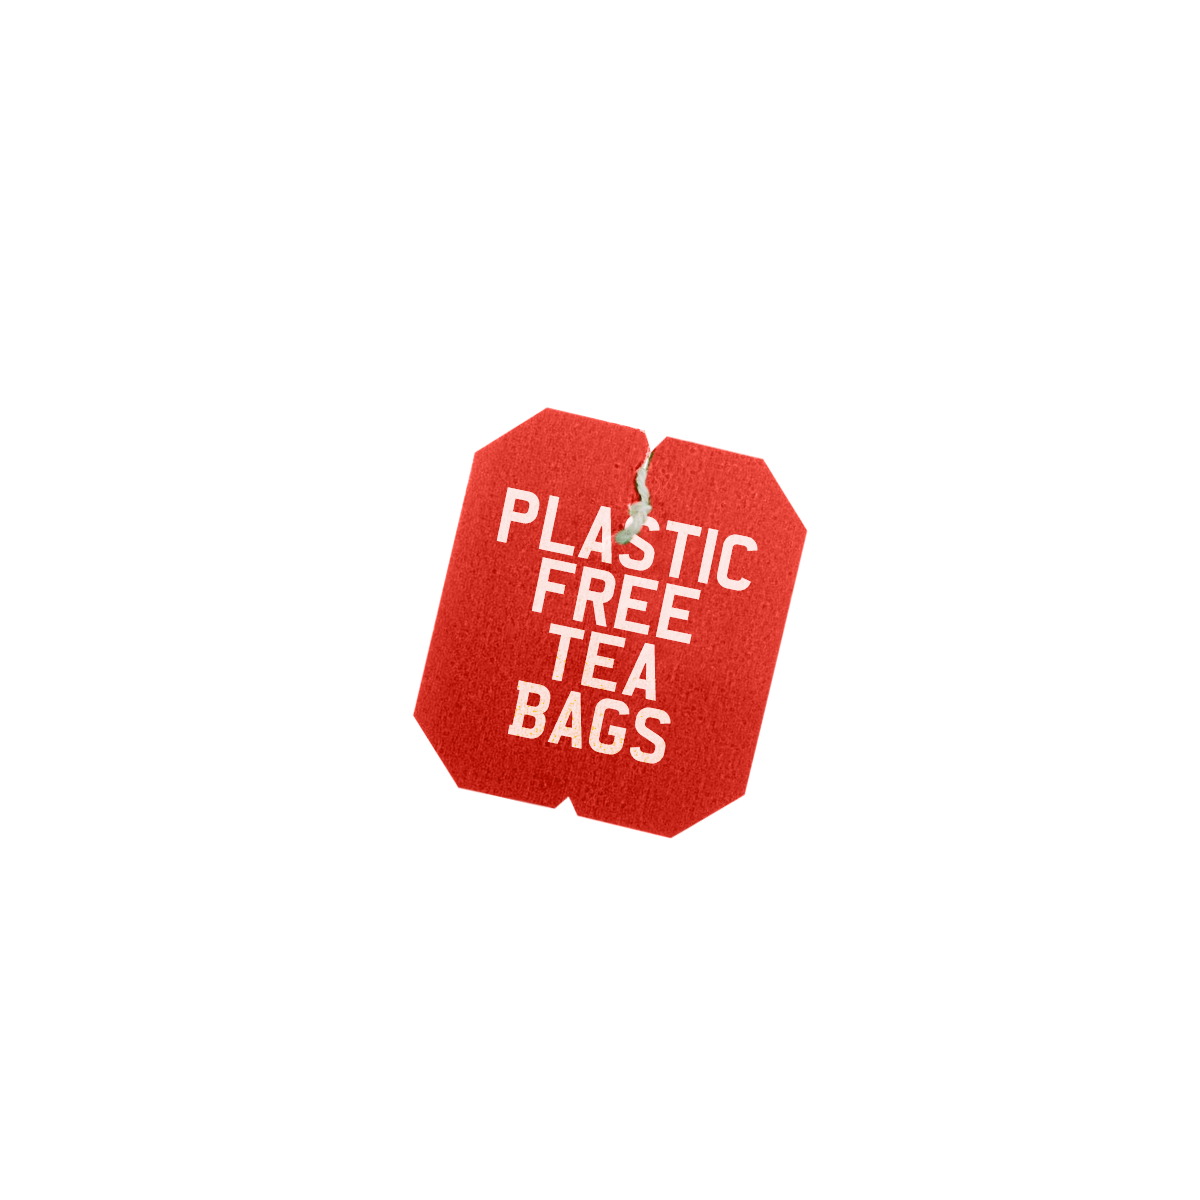 Plastic Free Tea Bags - Alan Dunn & Port Sunlight